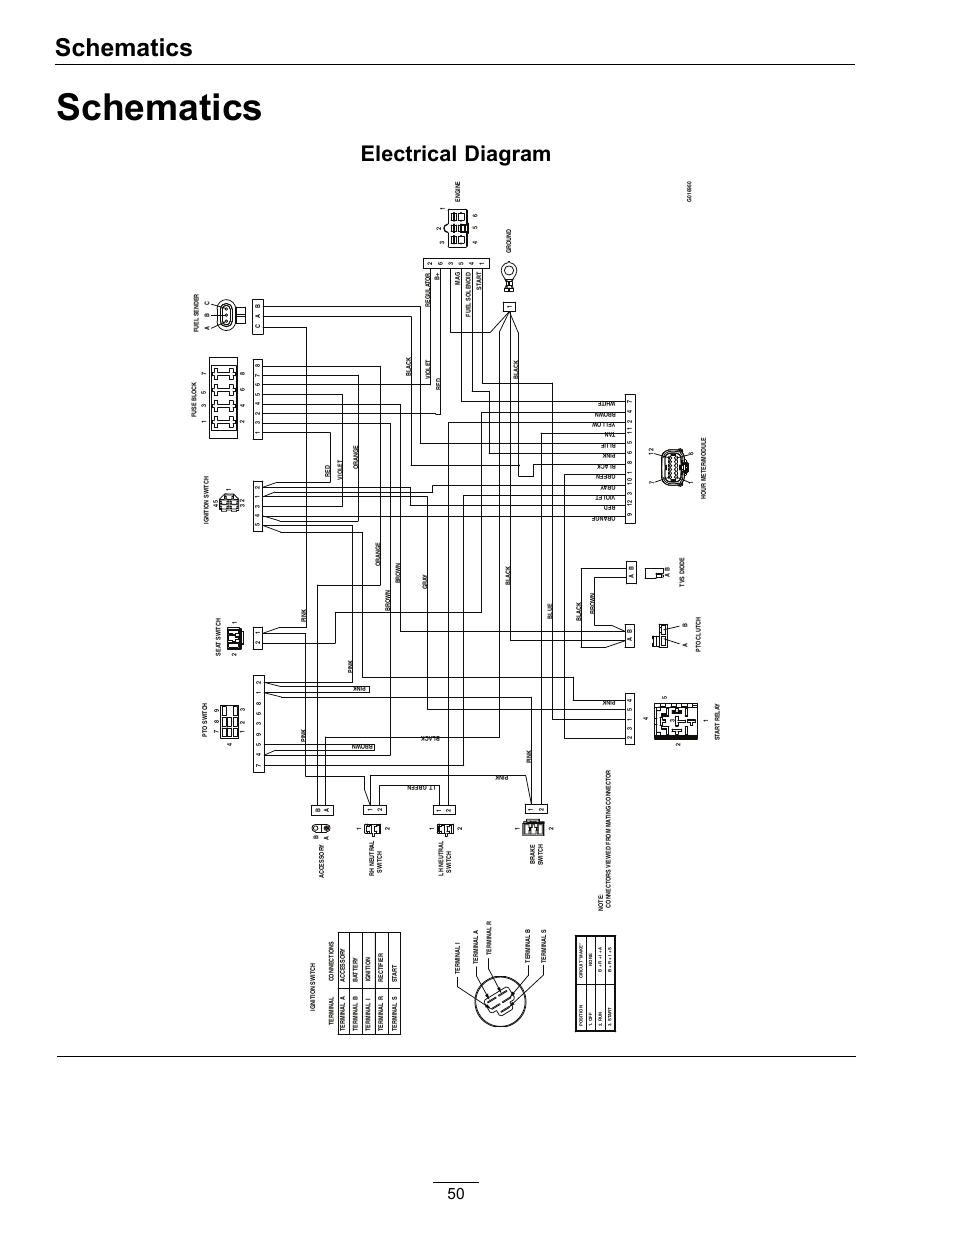 aiphone lef 3l wiring diagram